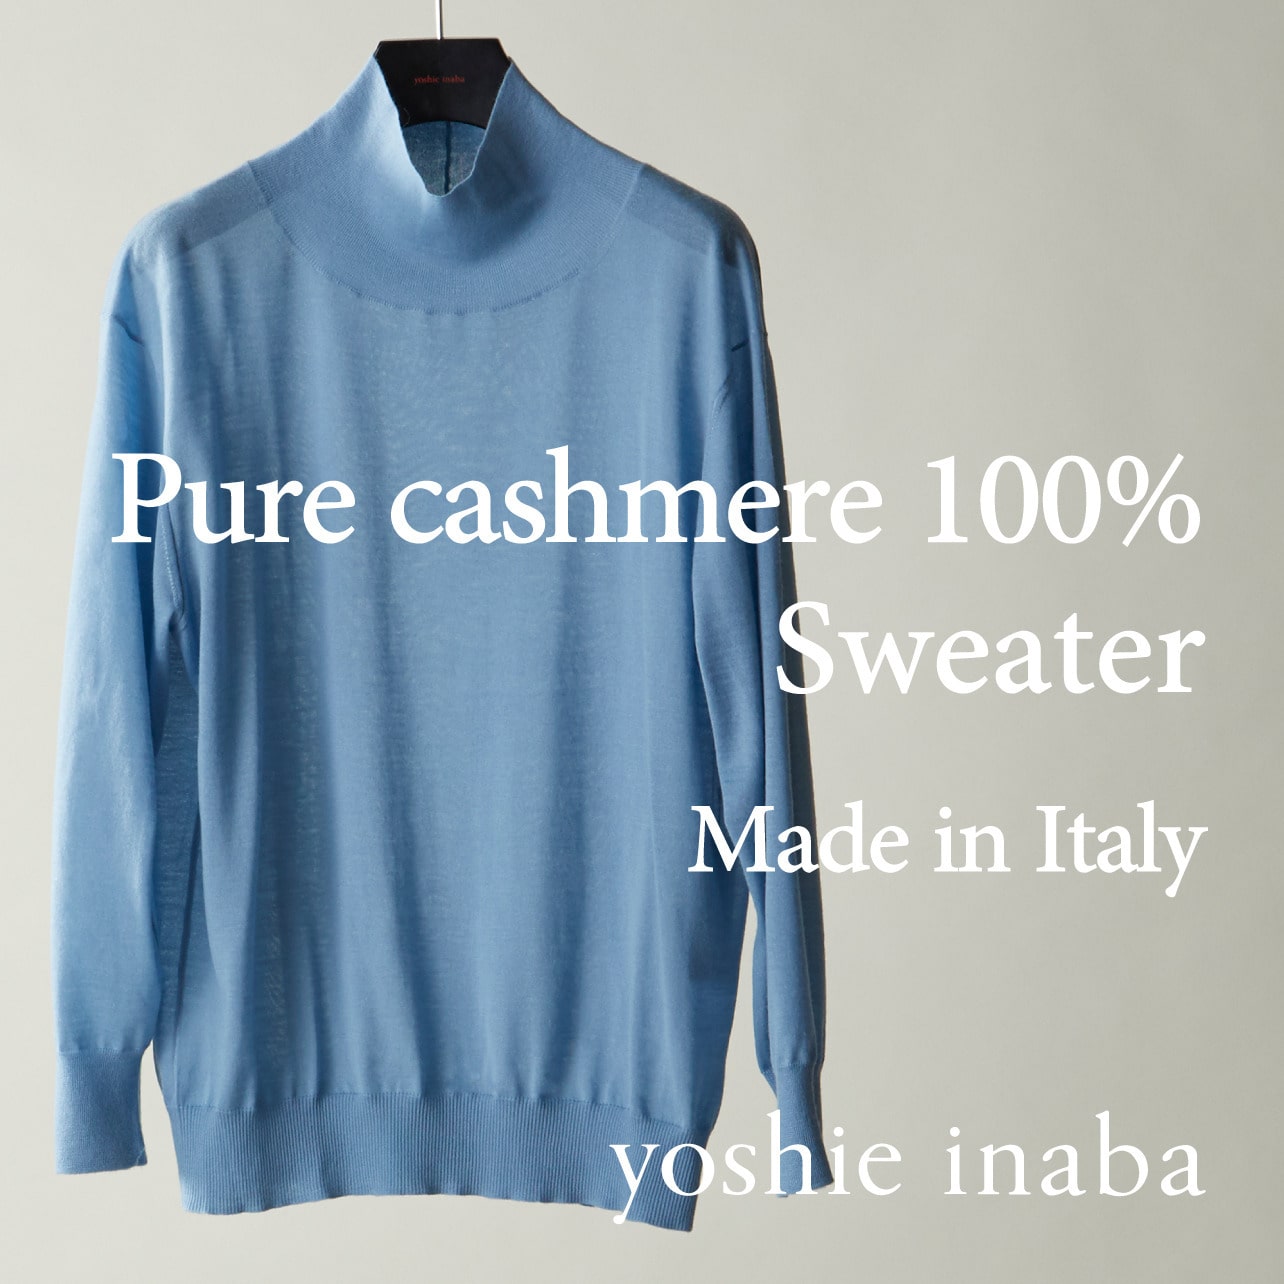 Pure cashmere 100% sweater